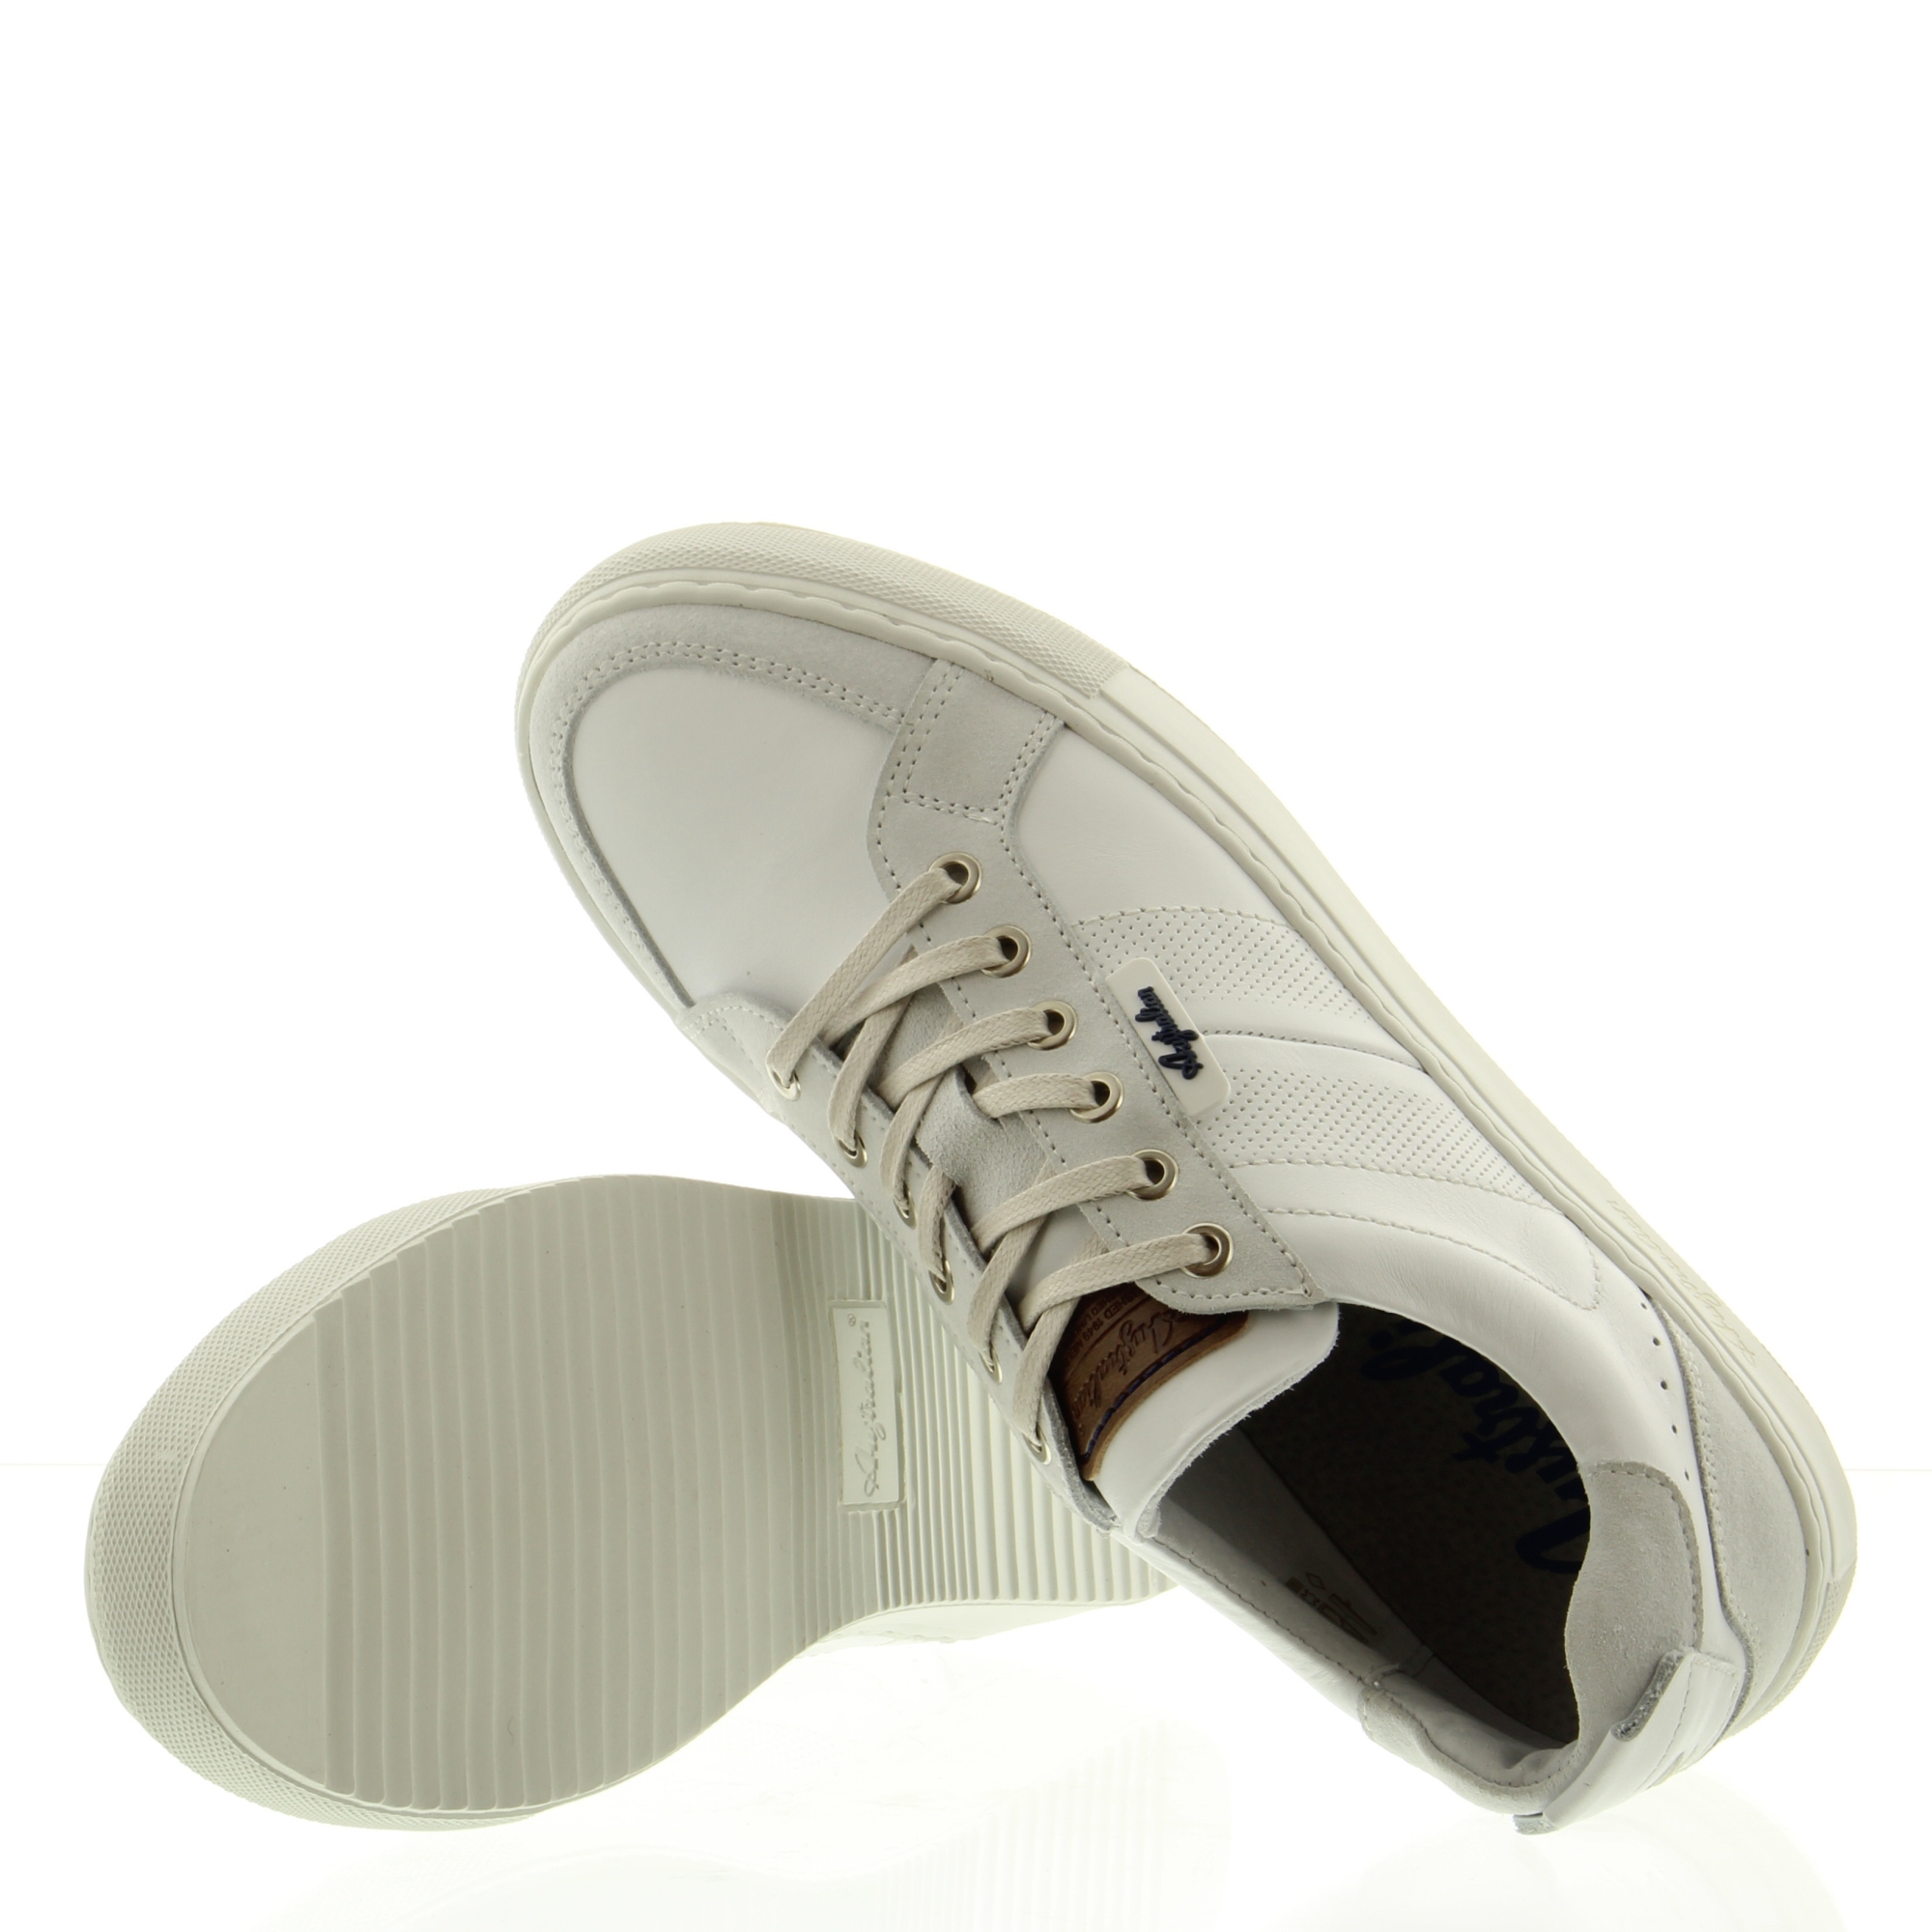 Australian Footwear Cardiff 15.1408.01 B00 White